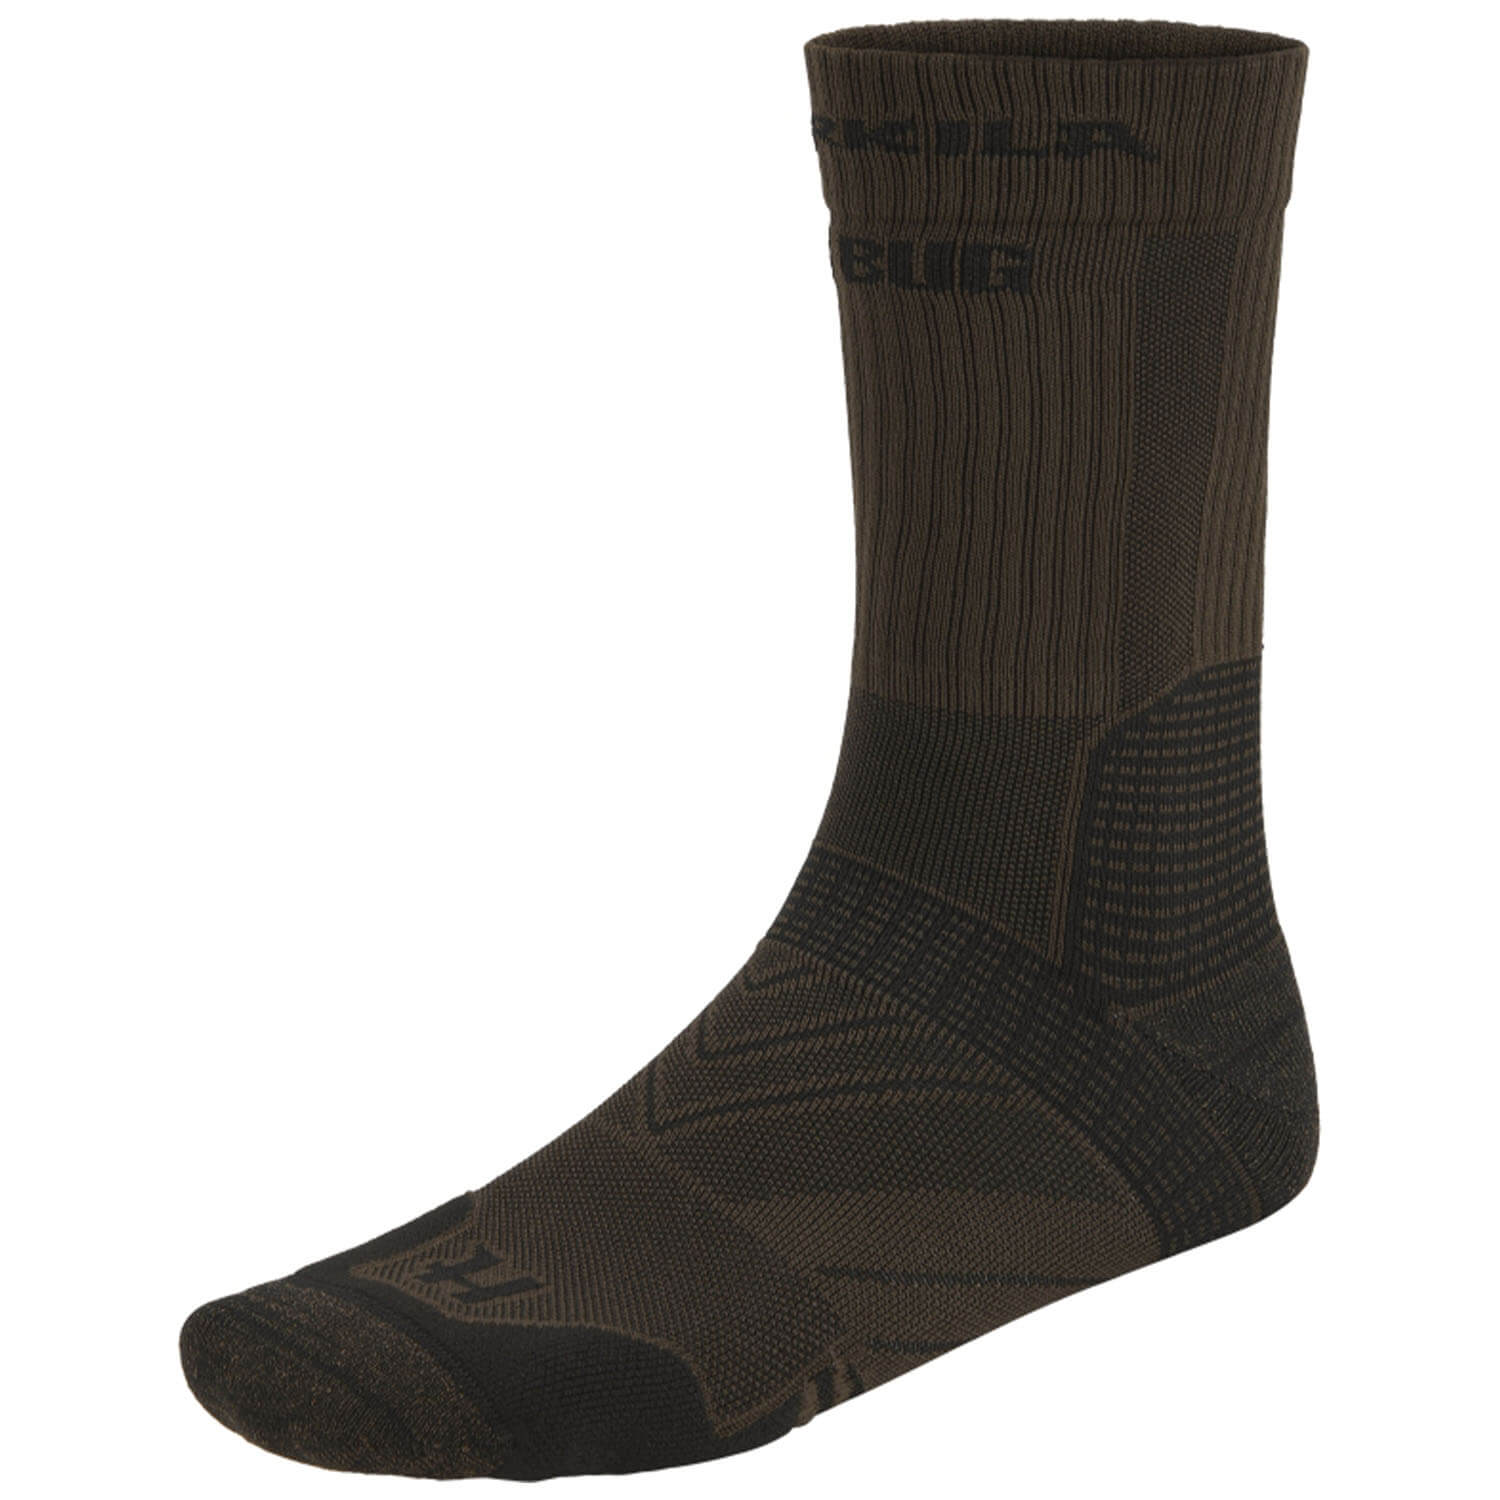 Härkila socks trail (Dark Olive/Willow Green) - Underwear